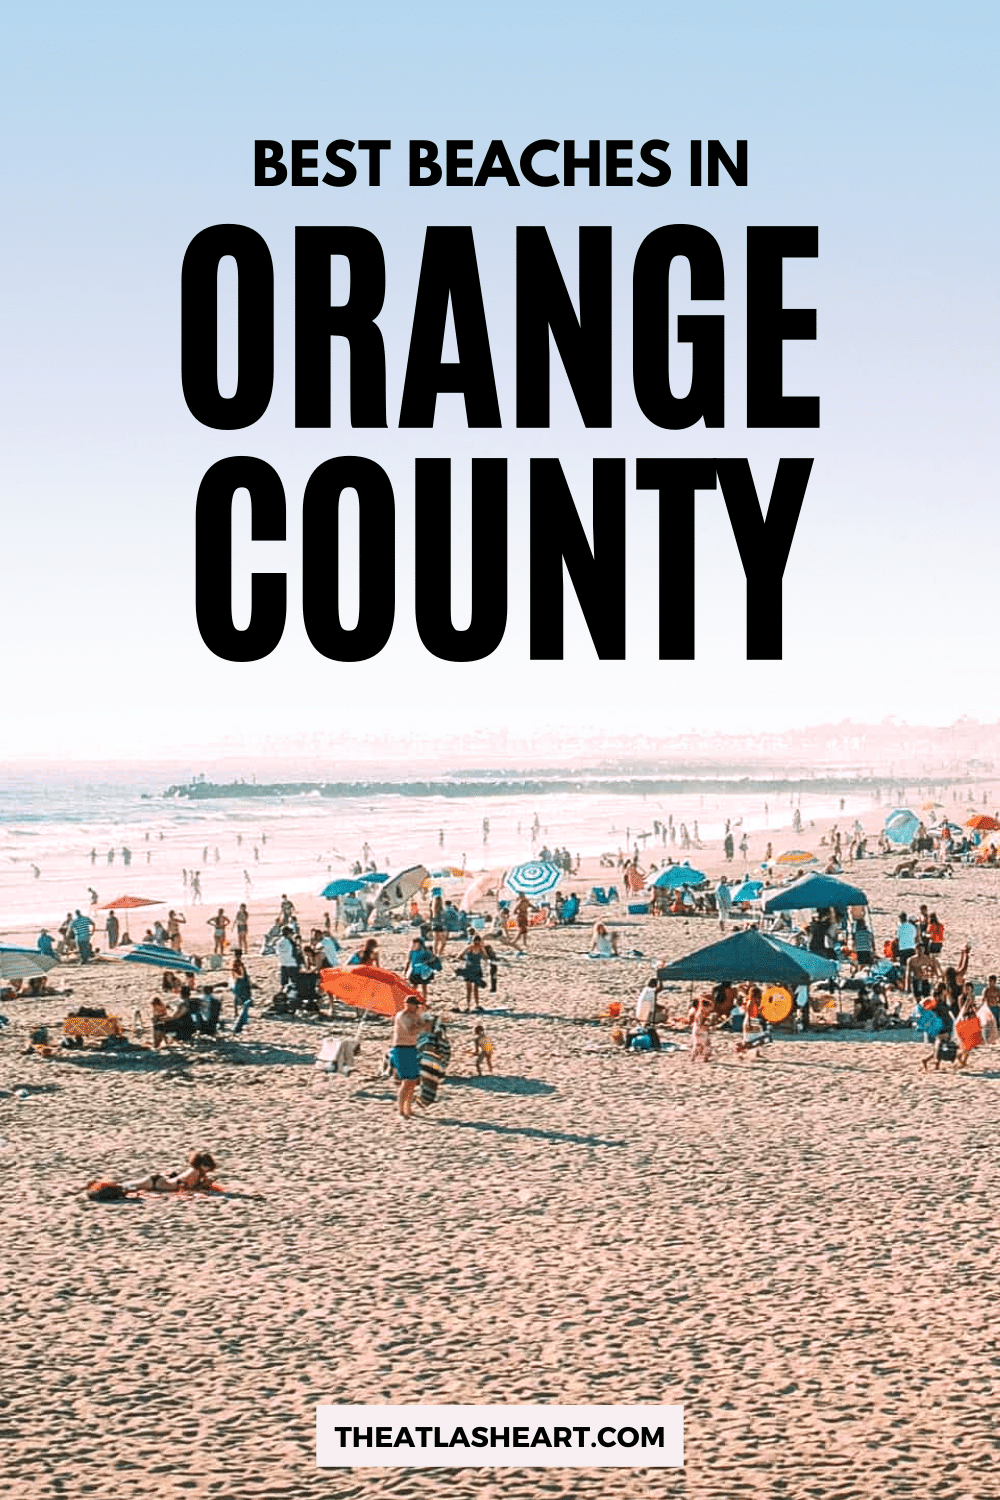 9 Best Beaches in Orange County, California to Soak Up the Sun